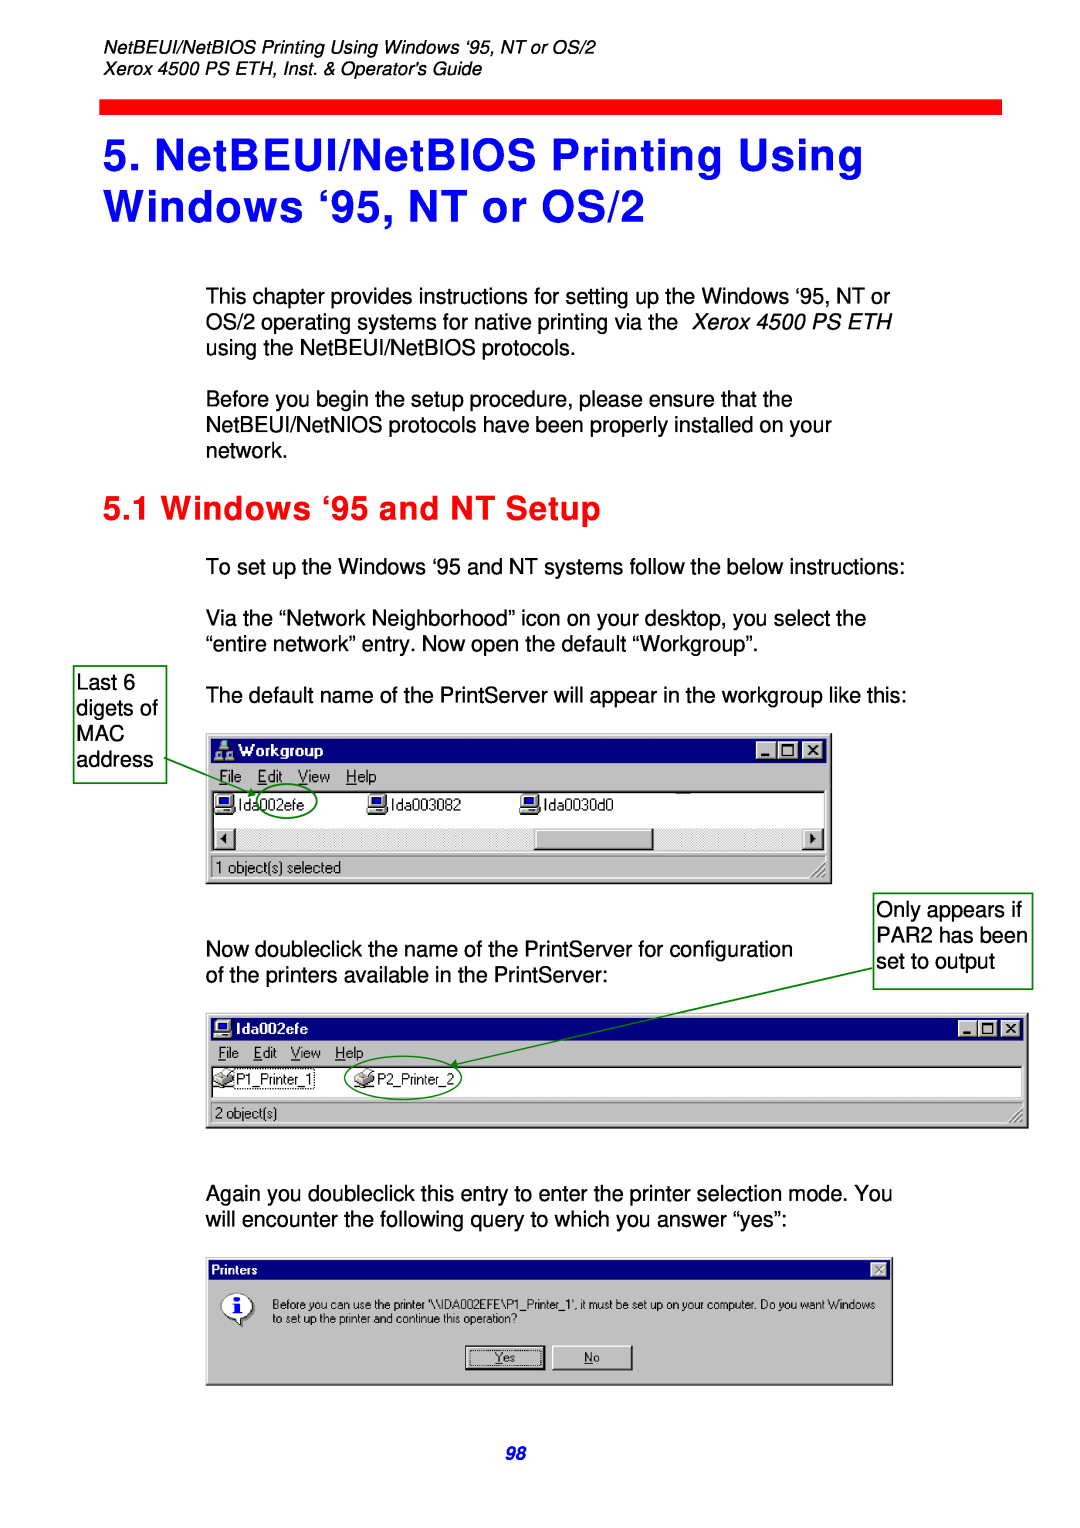 Xerox 4500 ps eth instruction manual NetBEUI/NetBIOS Printing Using Windows ‘95, NT or OS/2, Windows ‘95 and NT Setup 